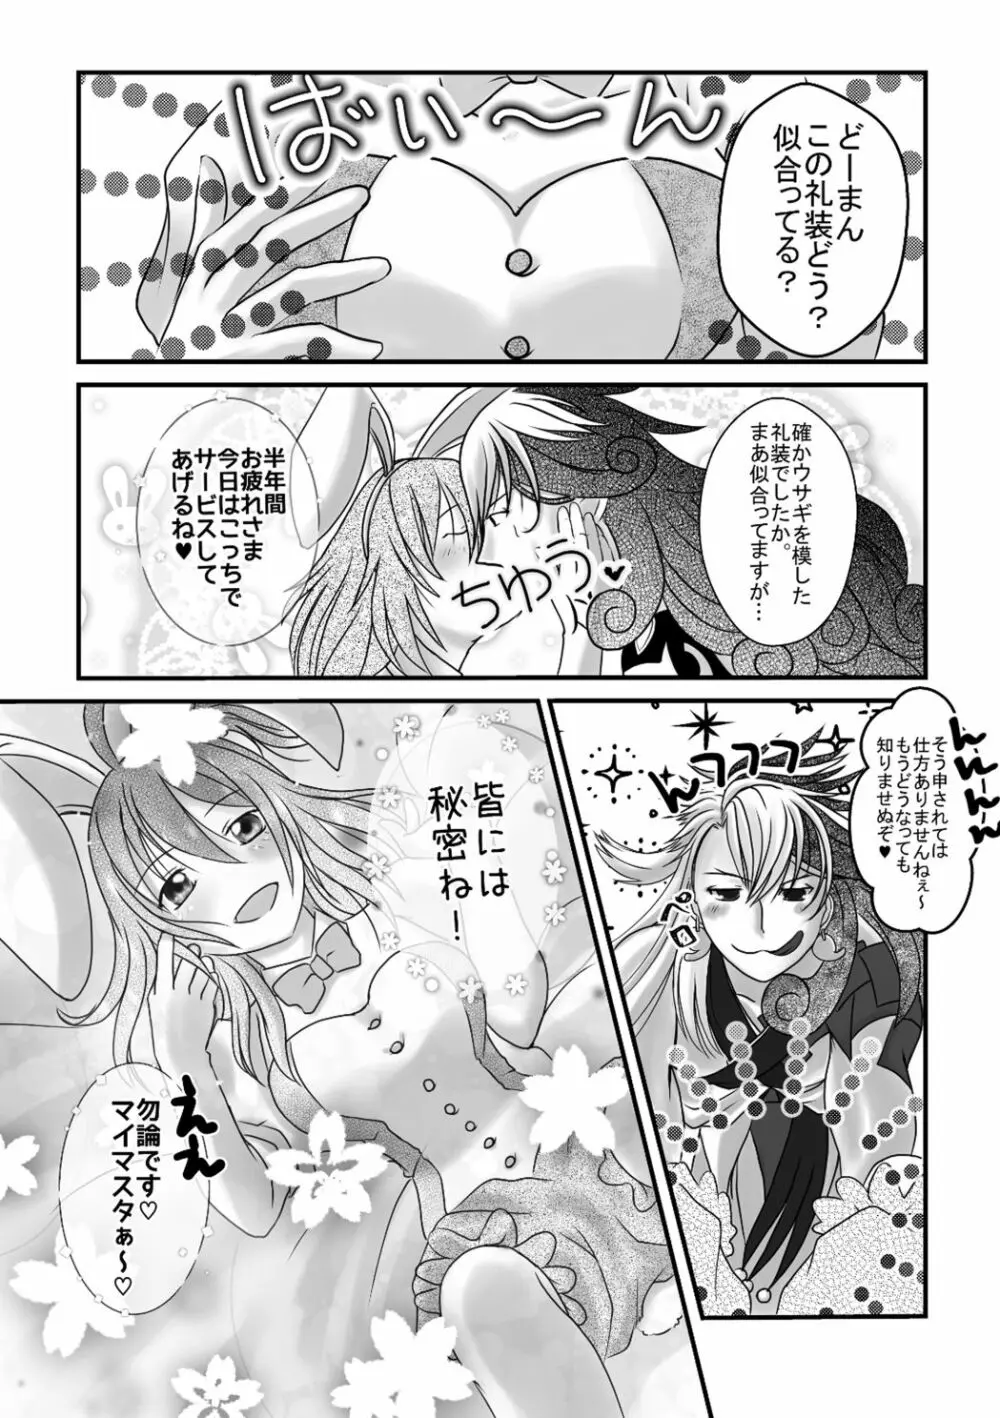 ] Rin guda ♀ rakugaki guda yuru manga(Fate/Grand Order] - page2